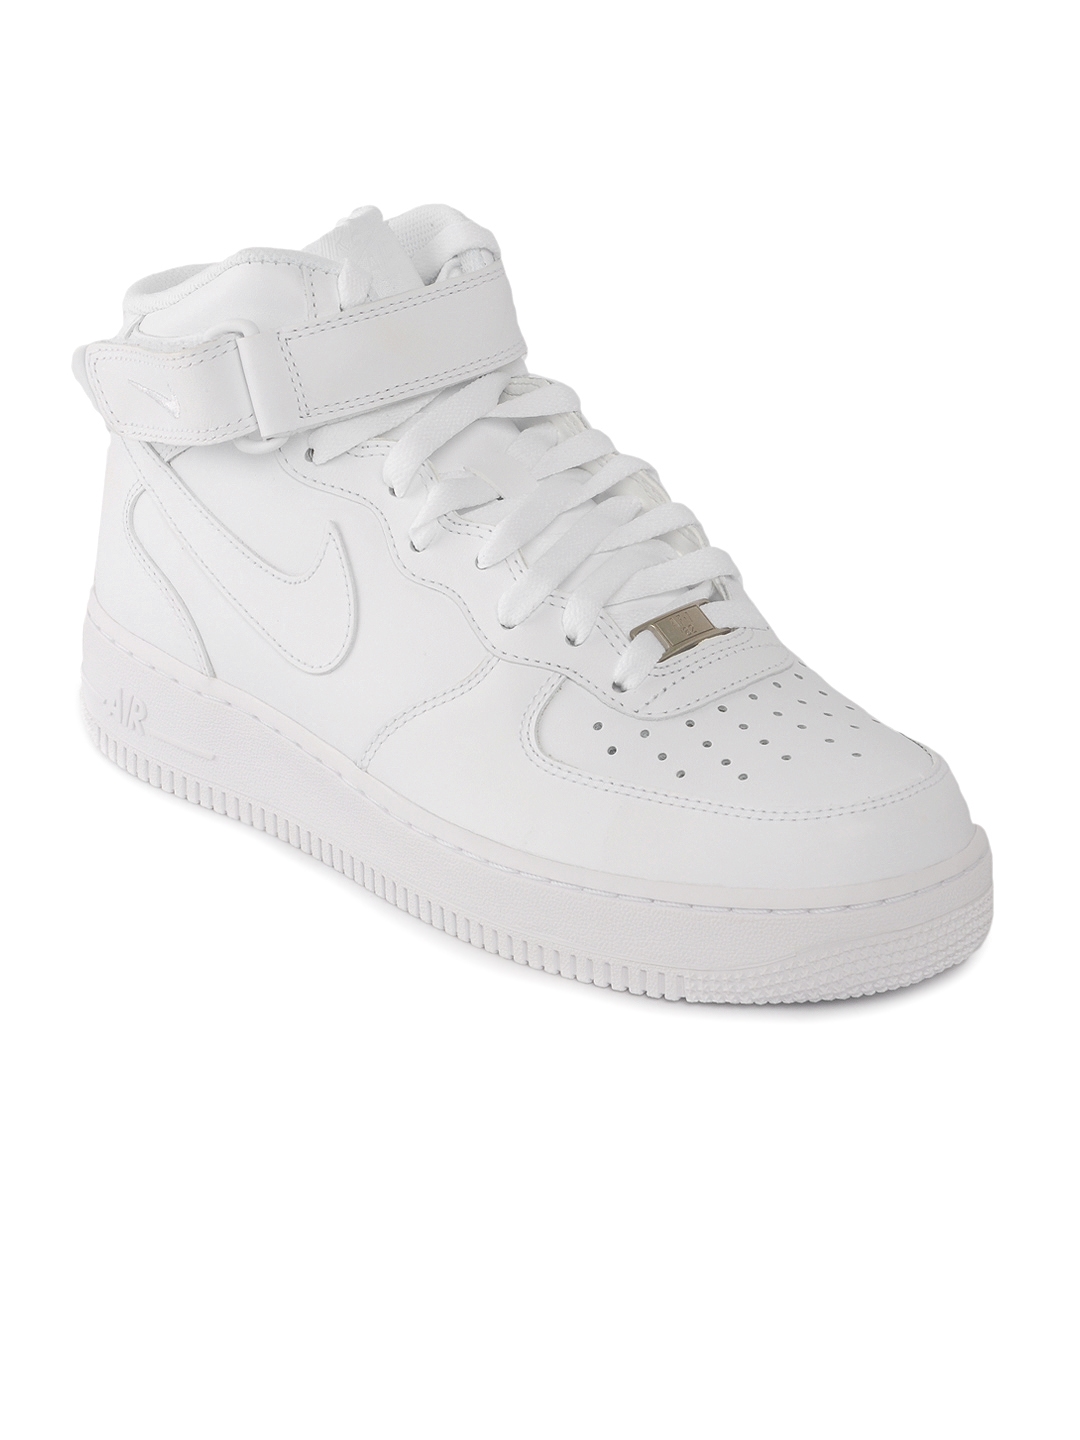 Buy Nike Men Air Force 1 White Shoes 